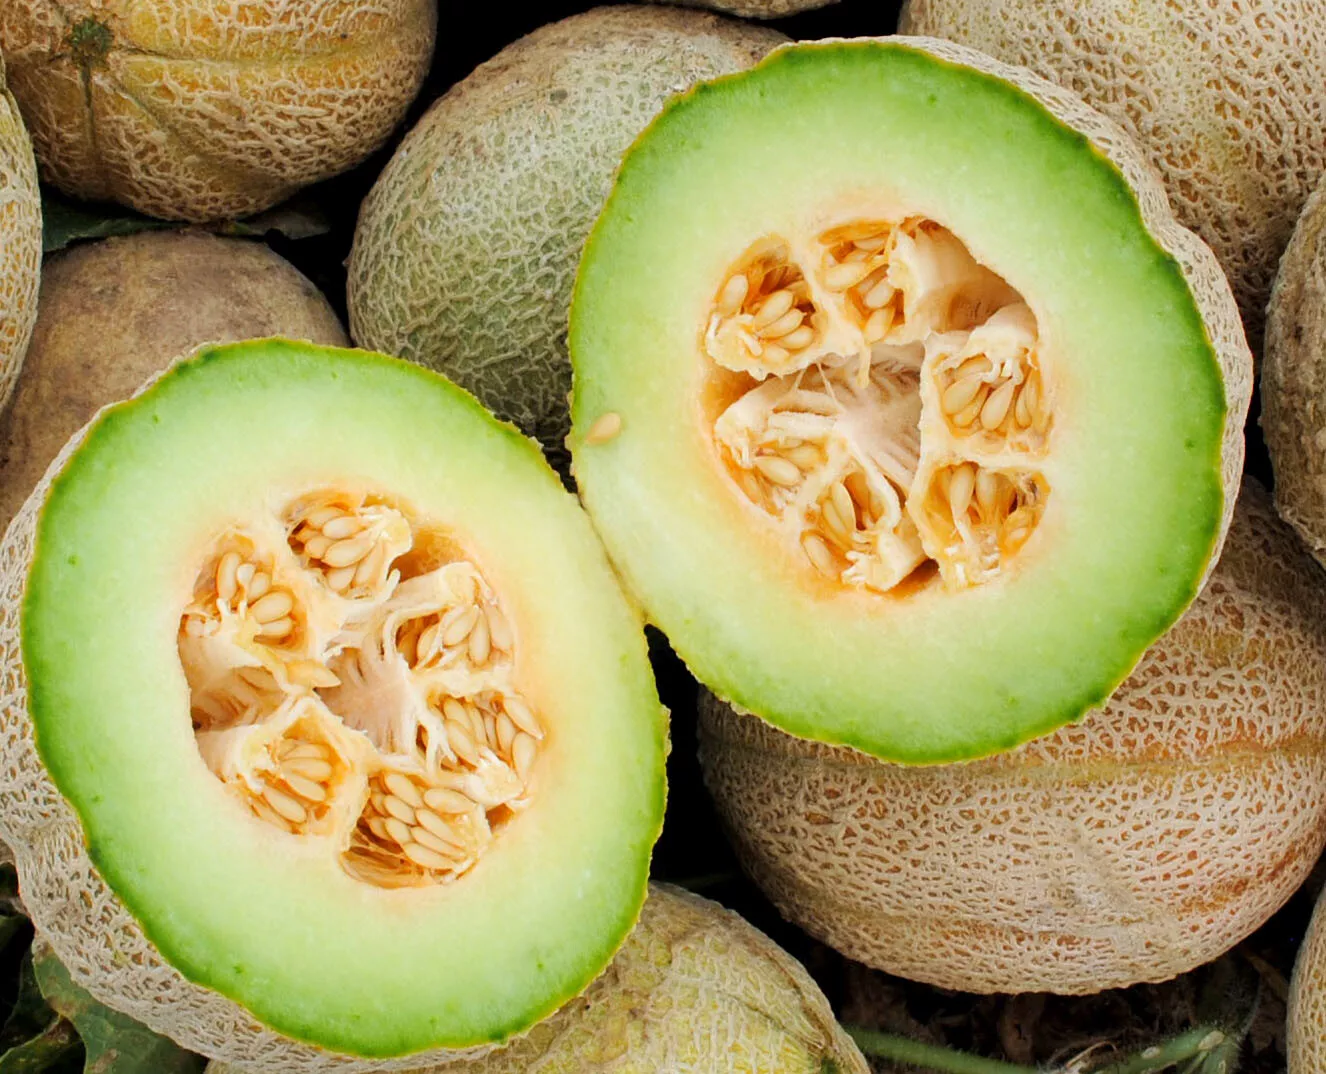 Rocky Ford Cantaloupe Green Flesh Eden Gem Melon Fruit 50 Seeds - $9.80